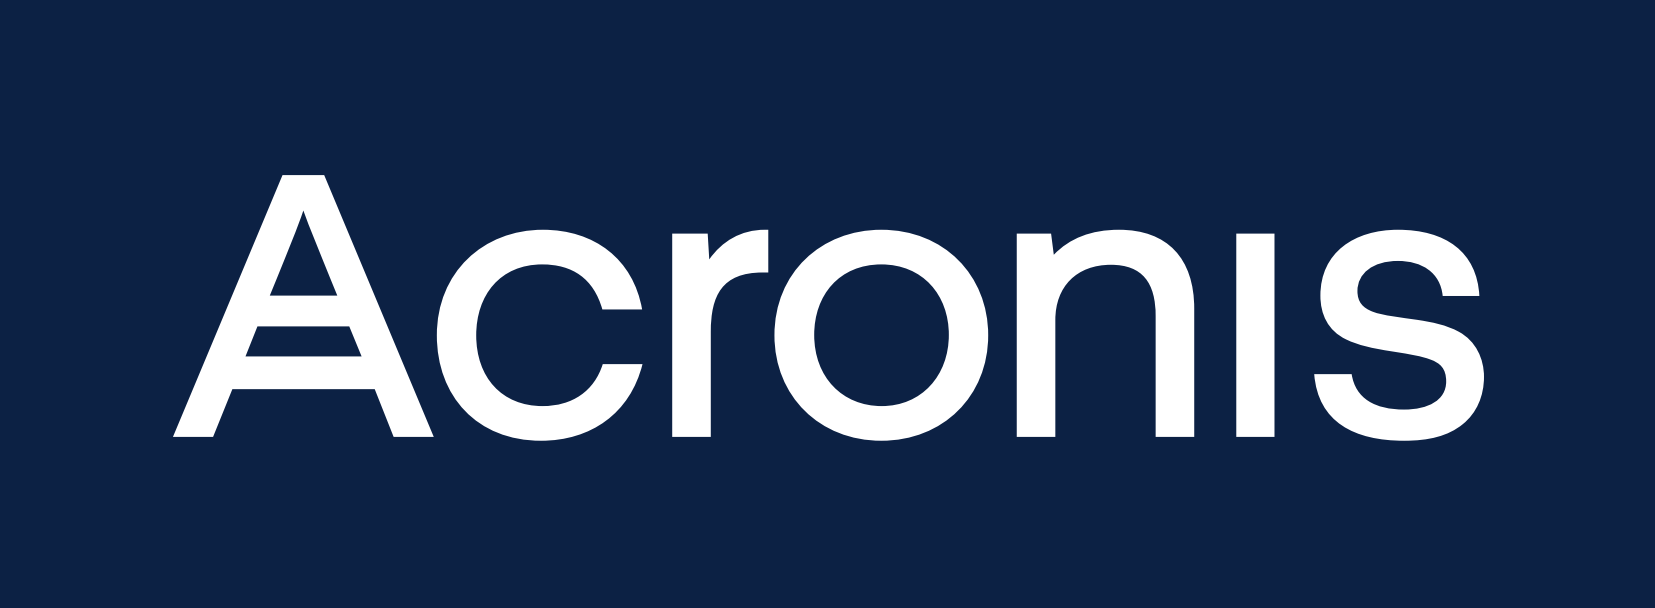 Acronis-logo-white-large.png